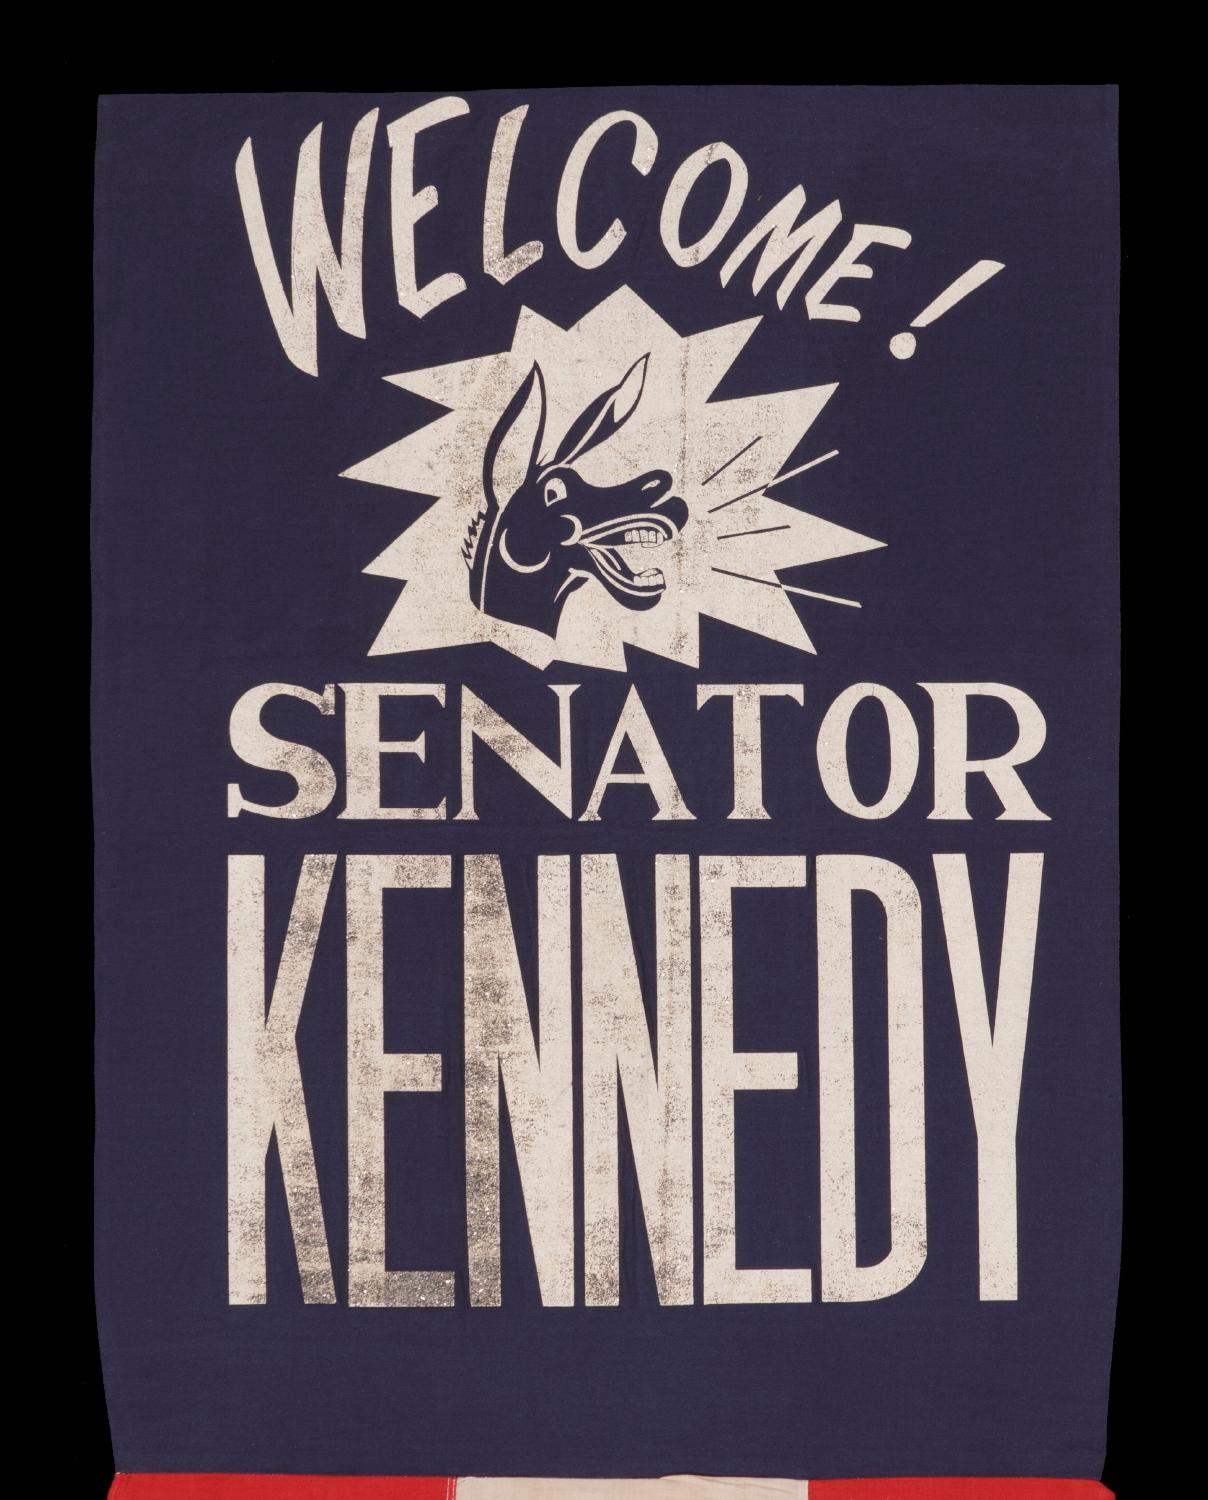 American Graphic Banner Welcoming John F. Kennedy as Senator from Massachusetts